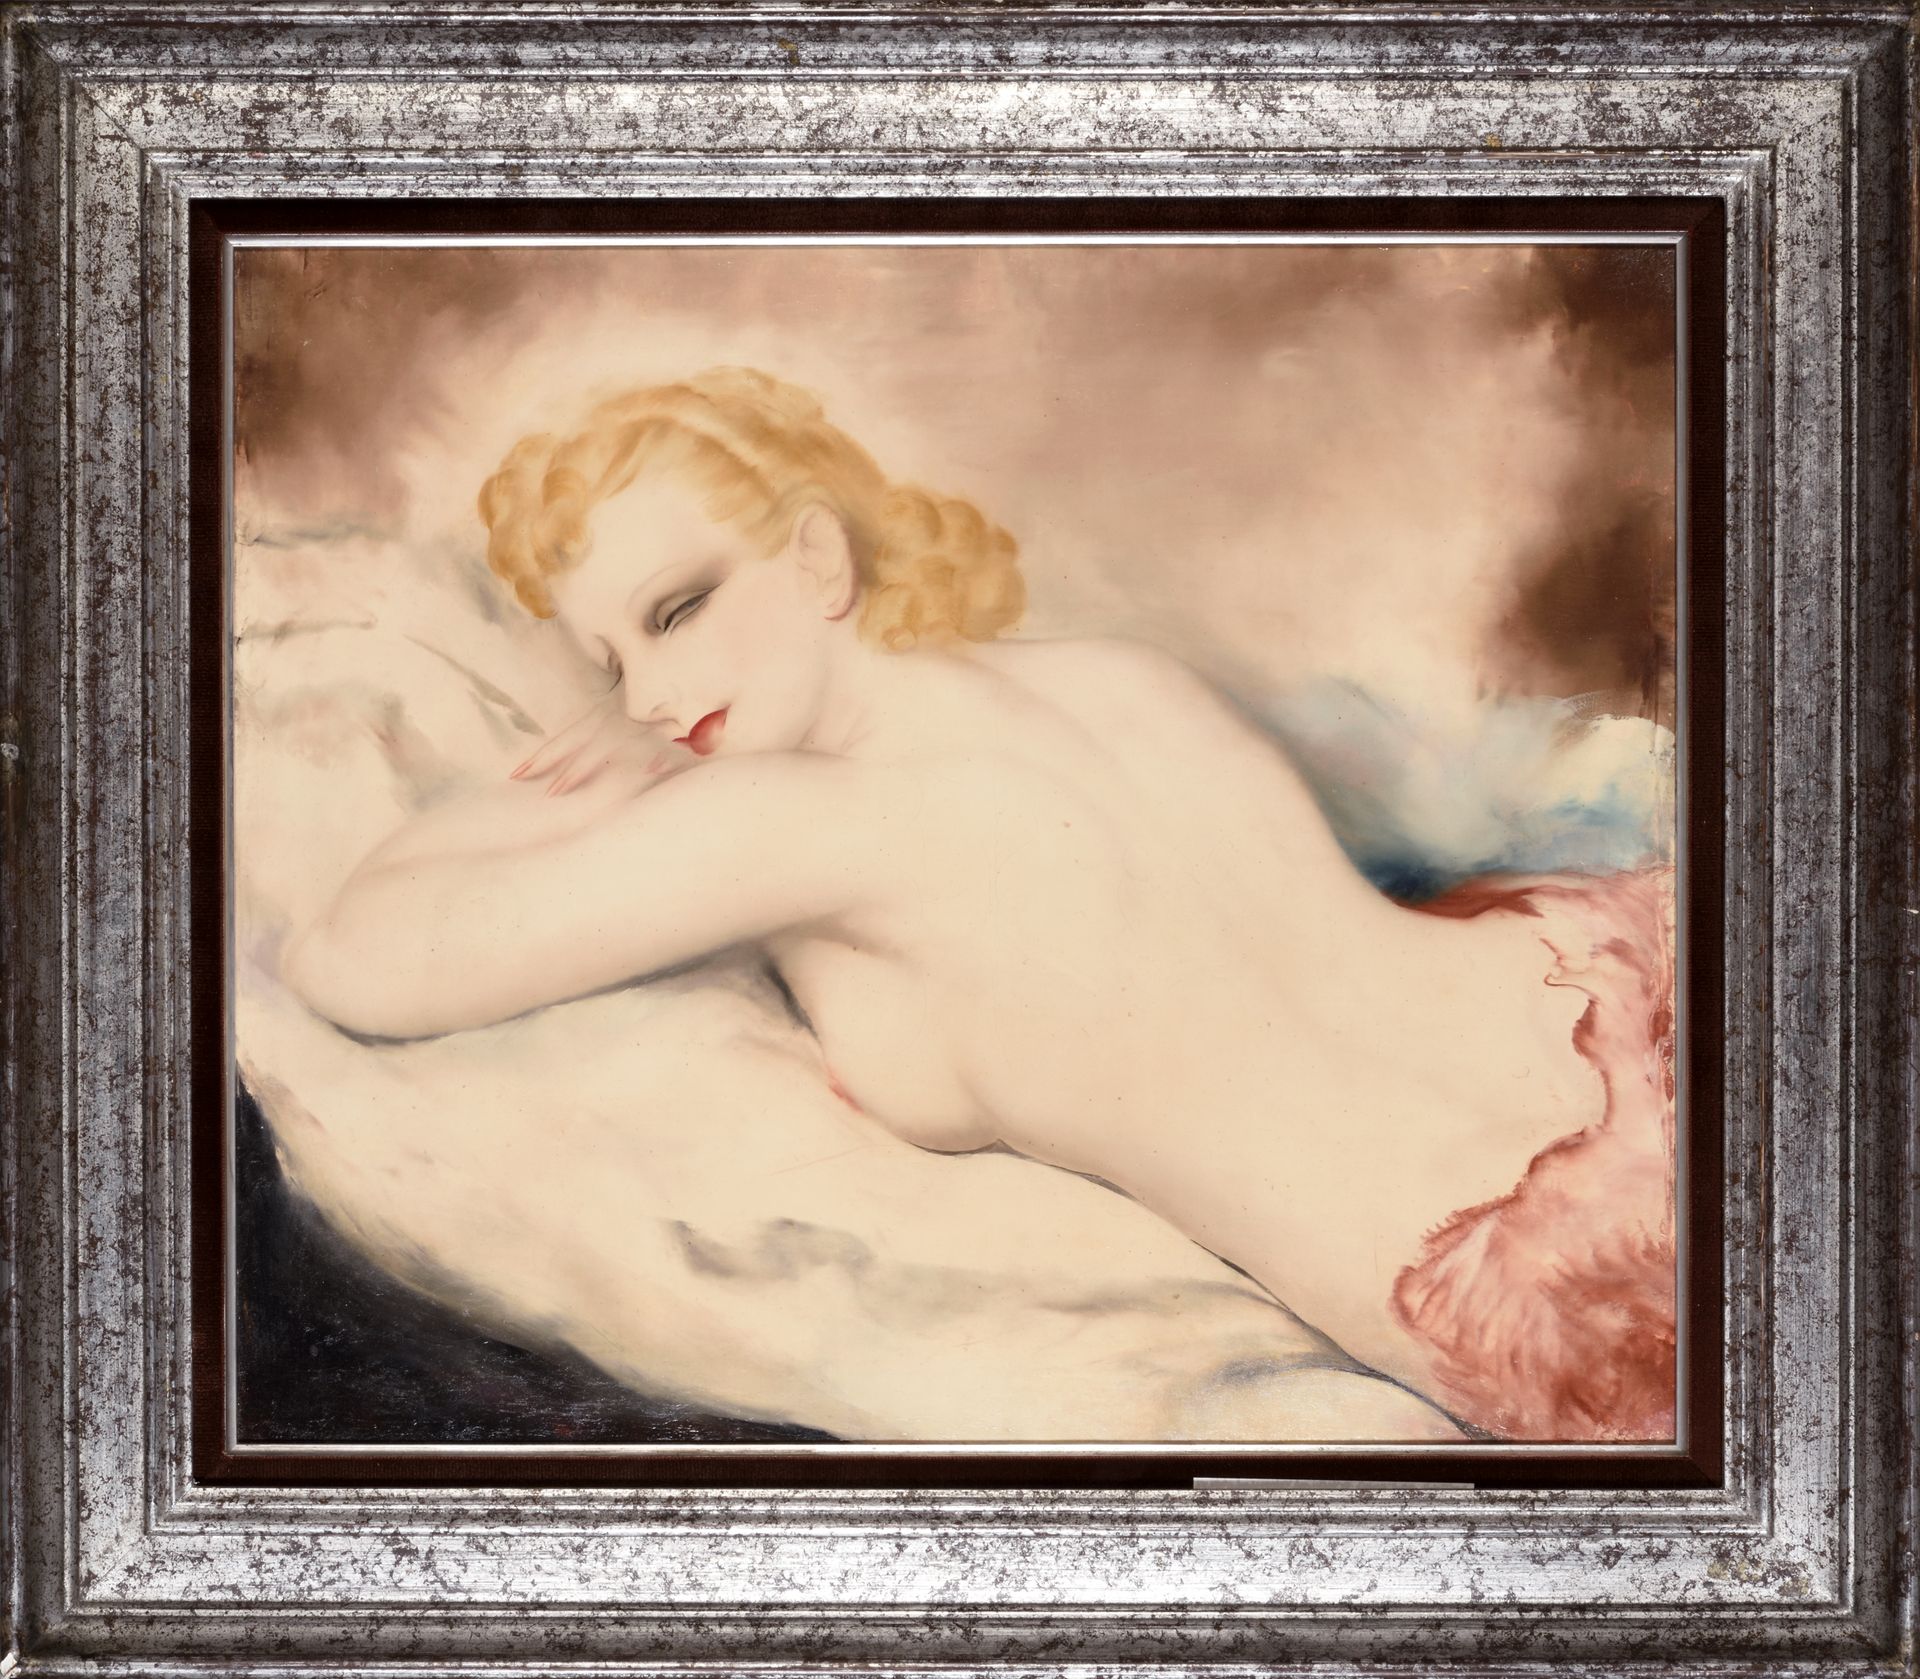 MICAO KONO (1876 - 1954) 茂野先生 (1876 - 1954)

拉长的女人

签名的布面油画

46 x 55厘米